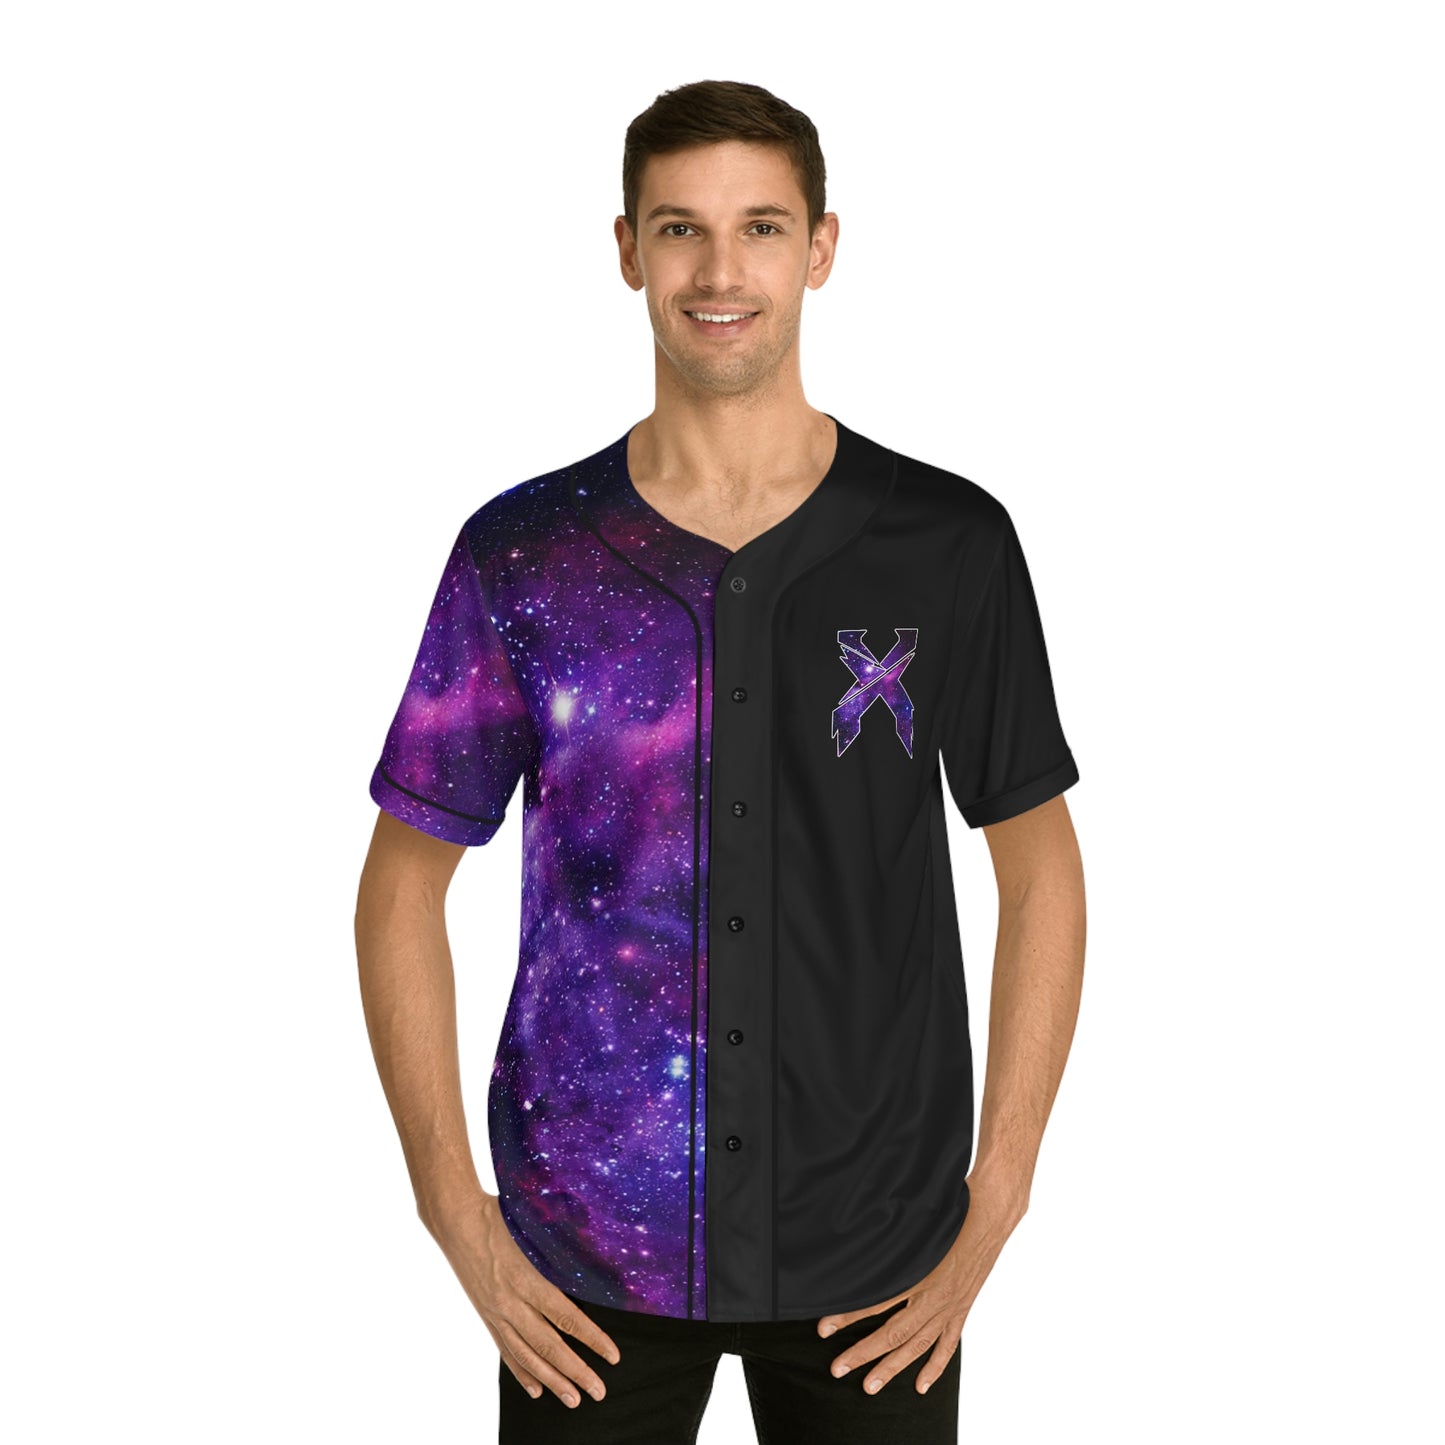 Excision Jersey (Black/Purple Galaxy)